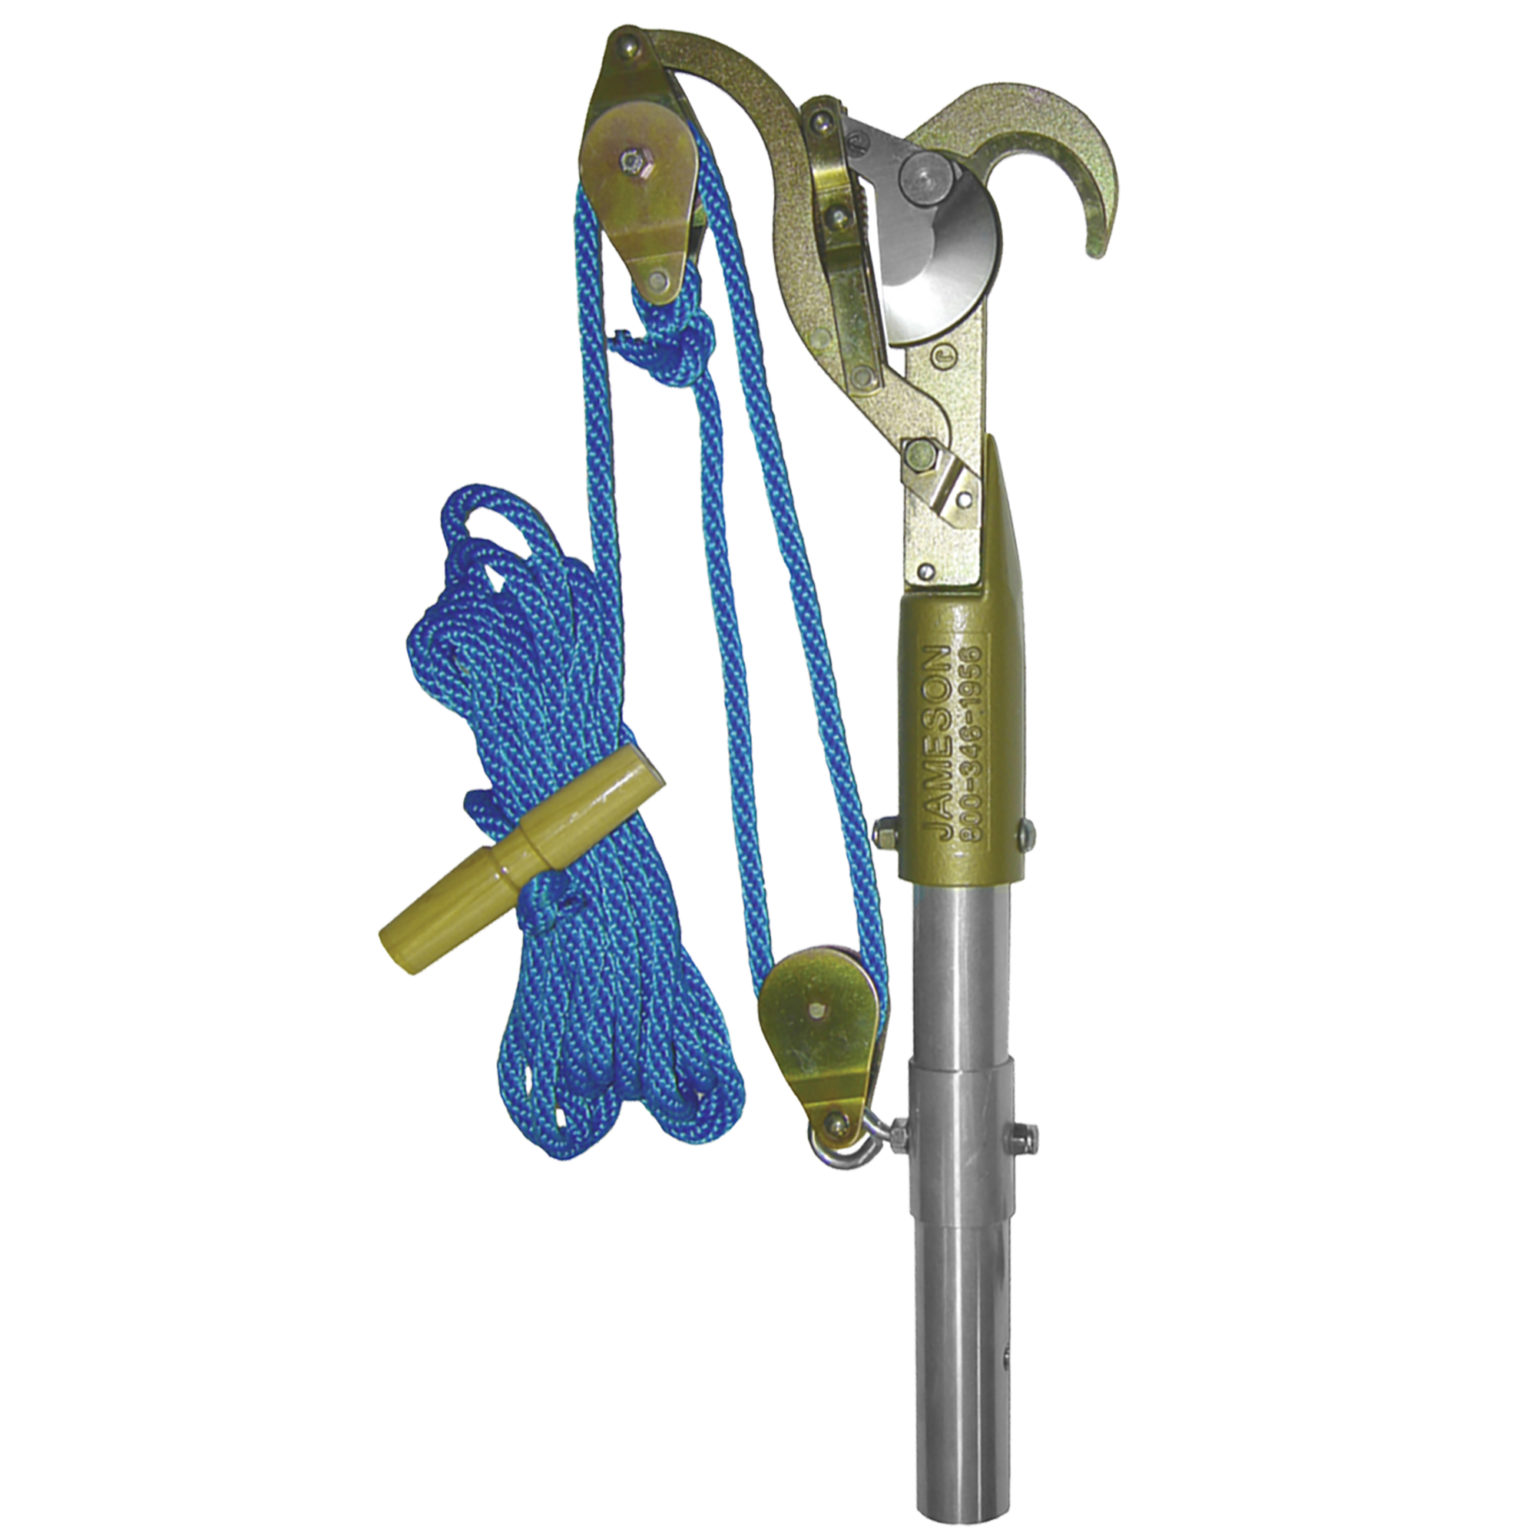 double-pulley-big-mouth-pruner-kit-1-75-jameson-tools-ja-34dp-pkg